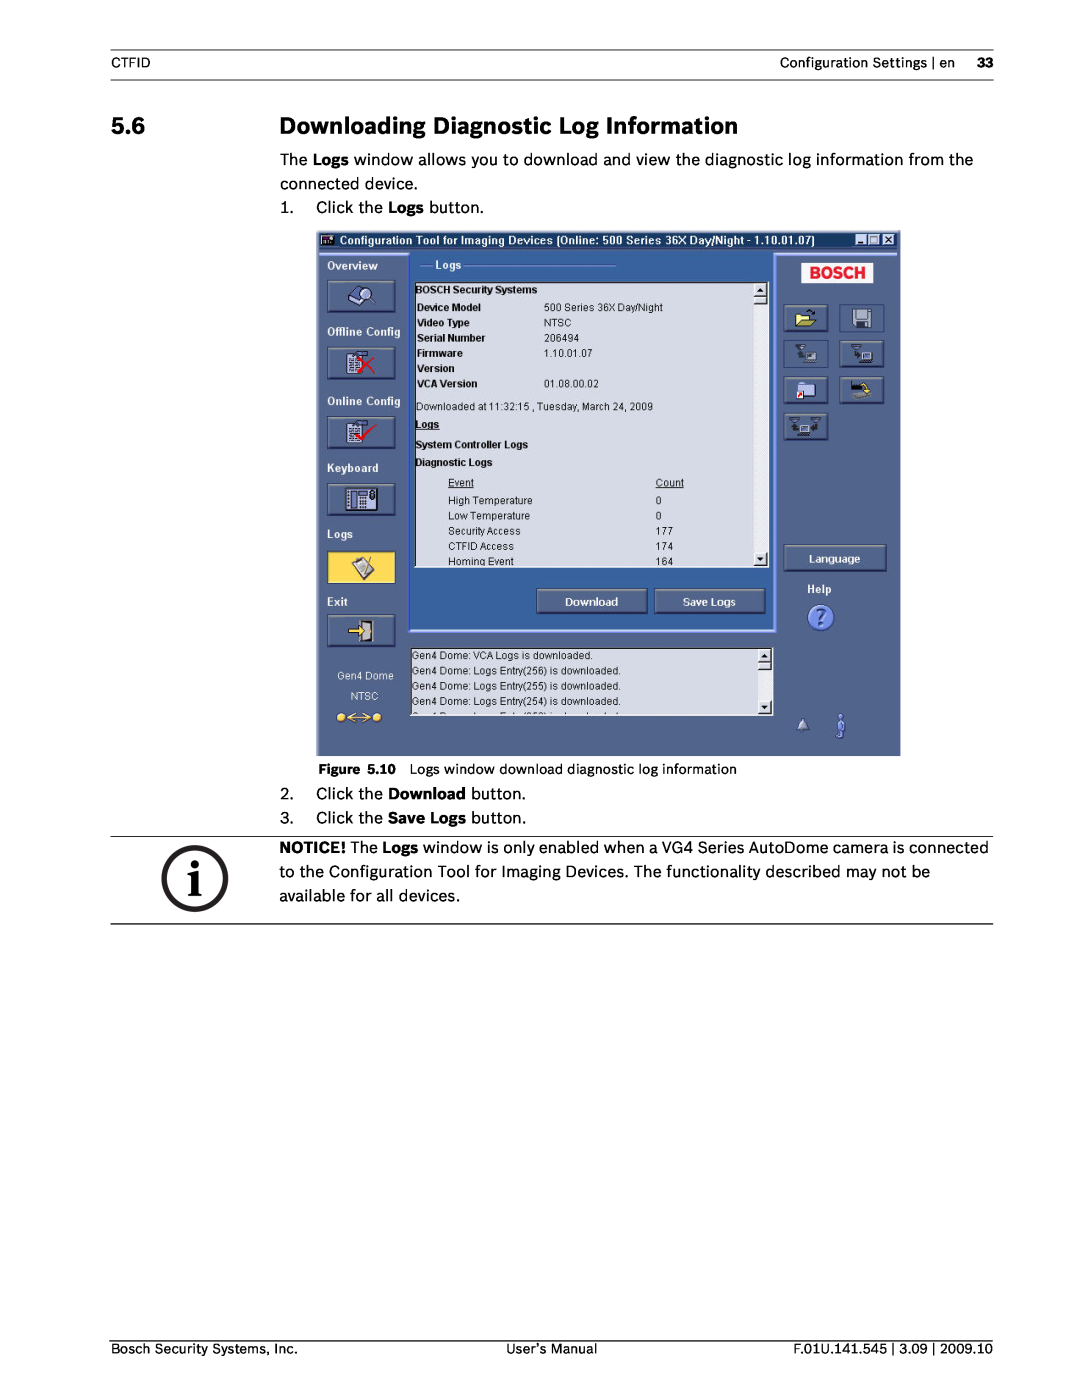 Bosch Appliances VP-CFGSFT user manual Downloading Diagnostic Log Information 